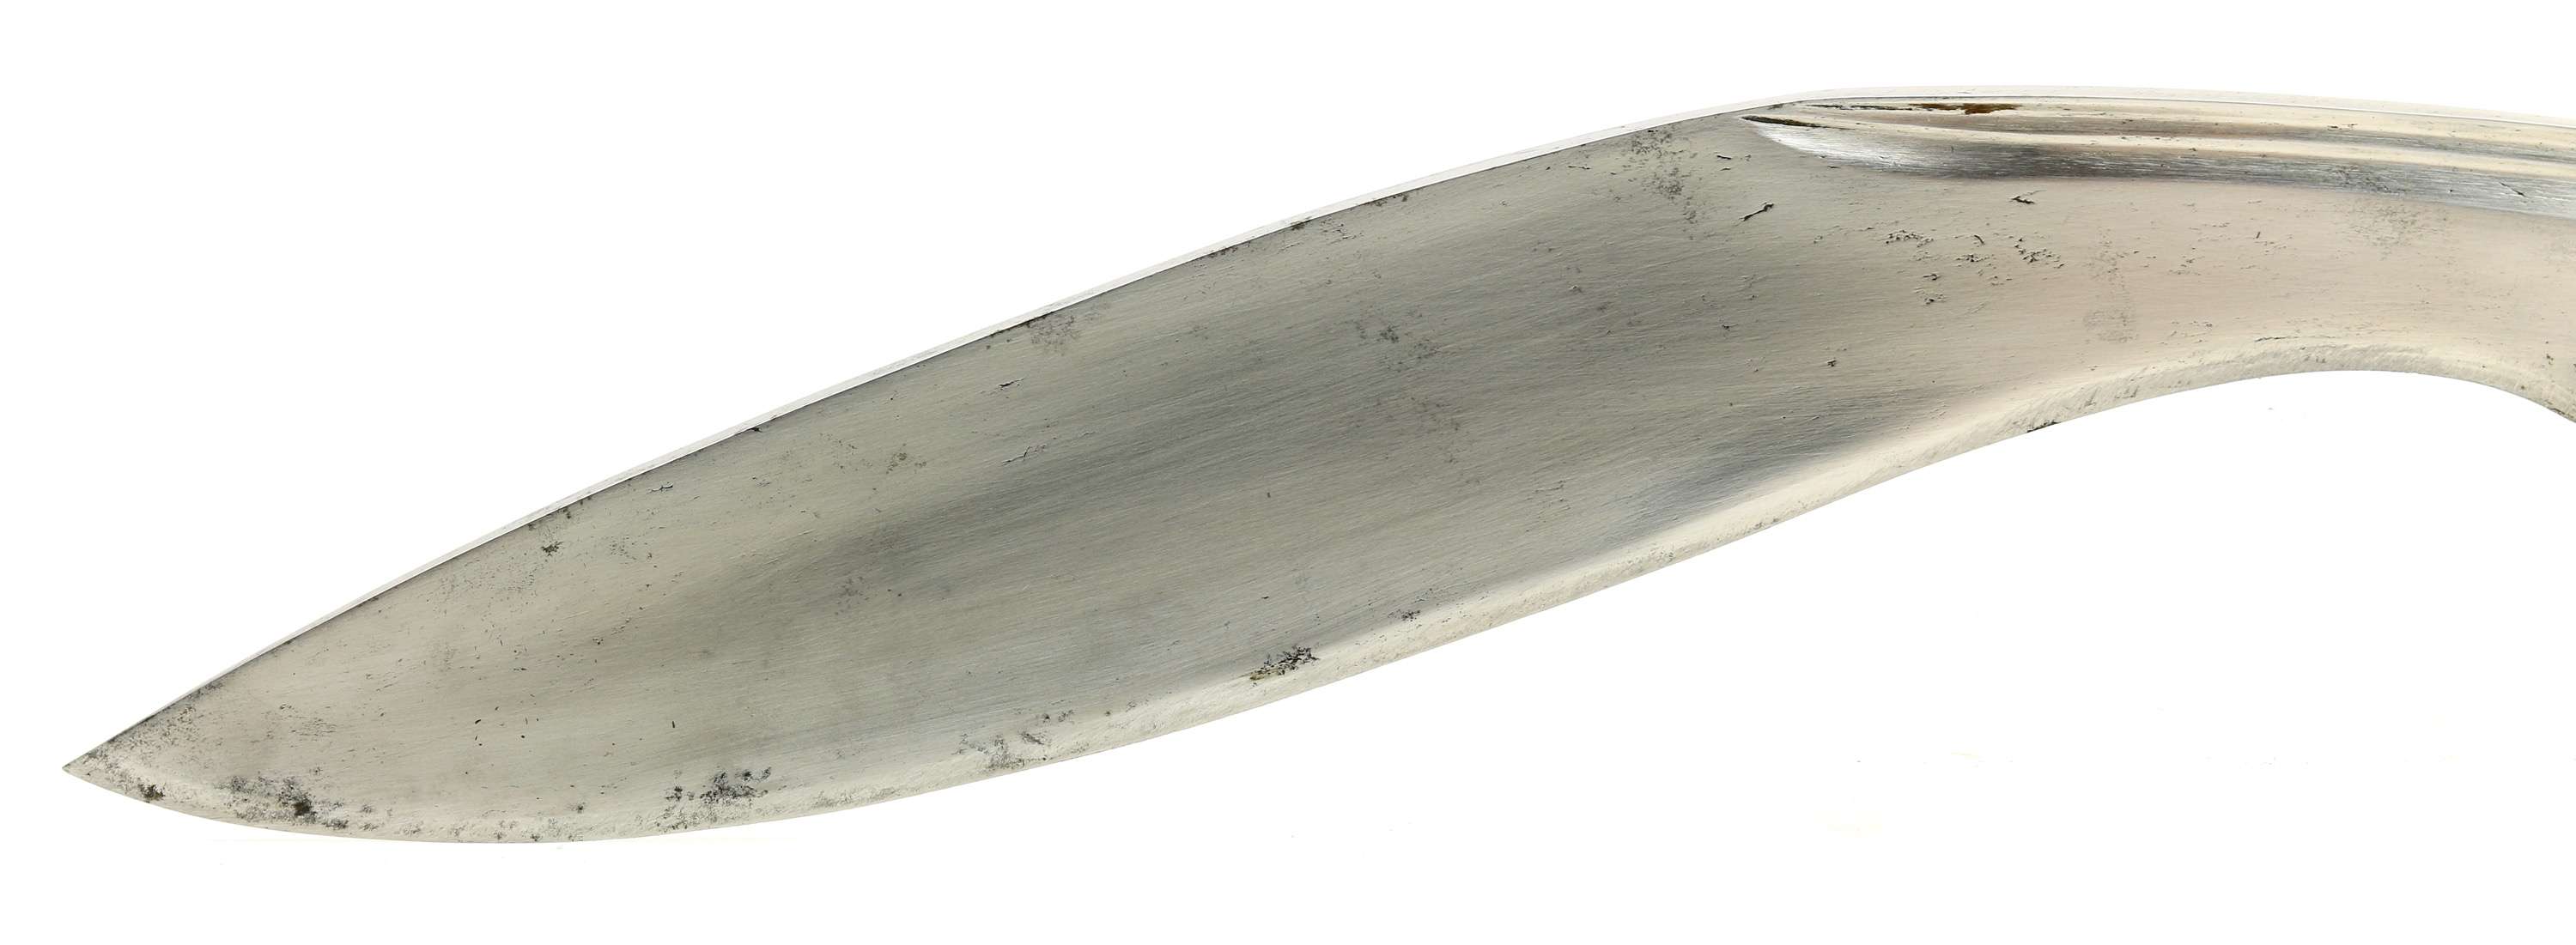 A 19th century khukuri with very good blade